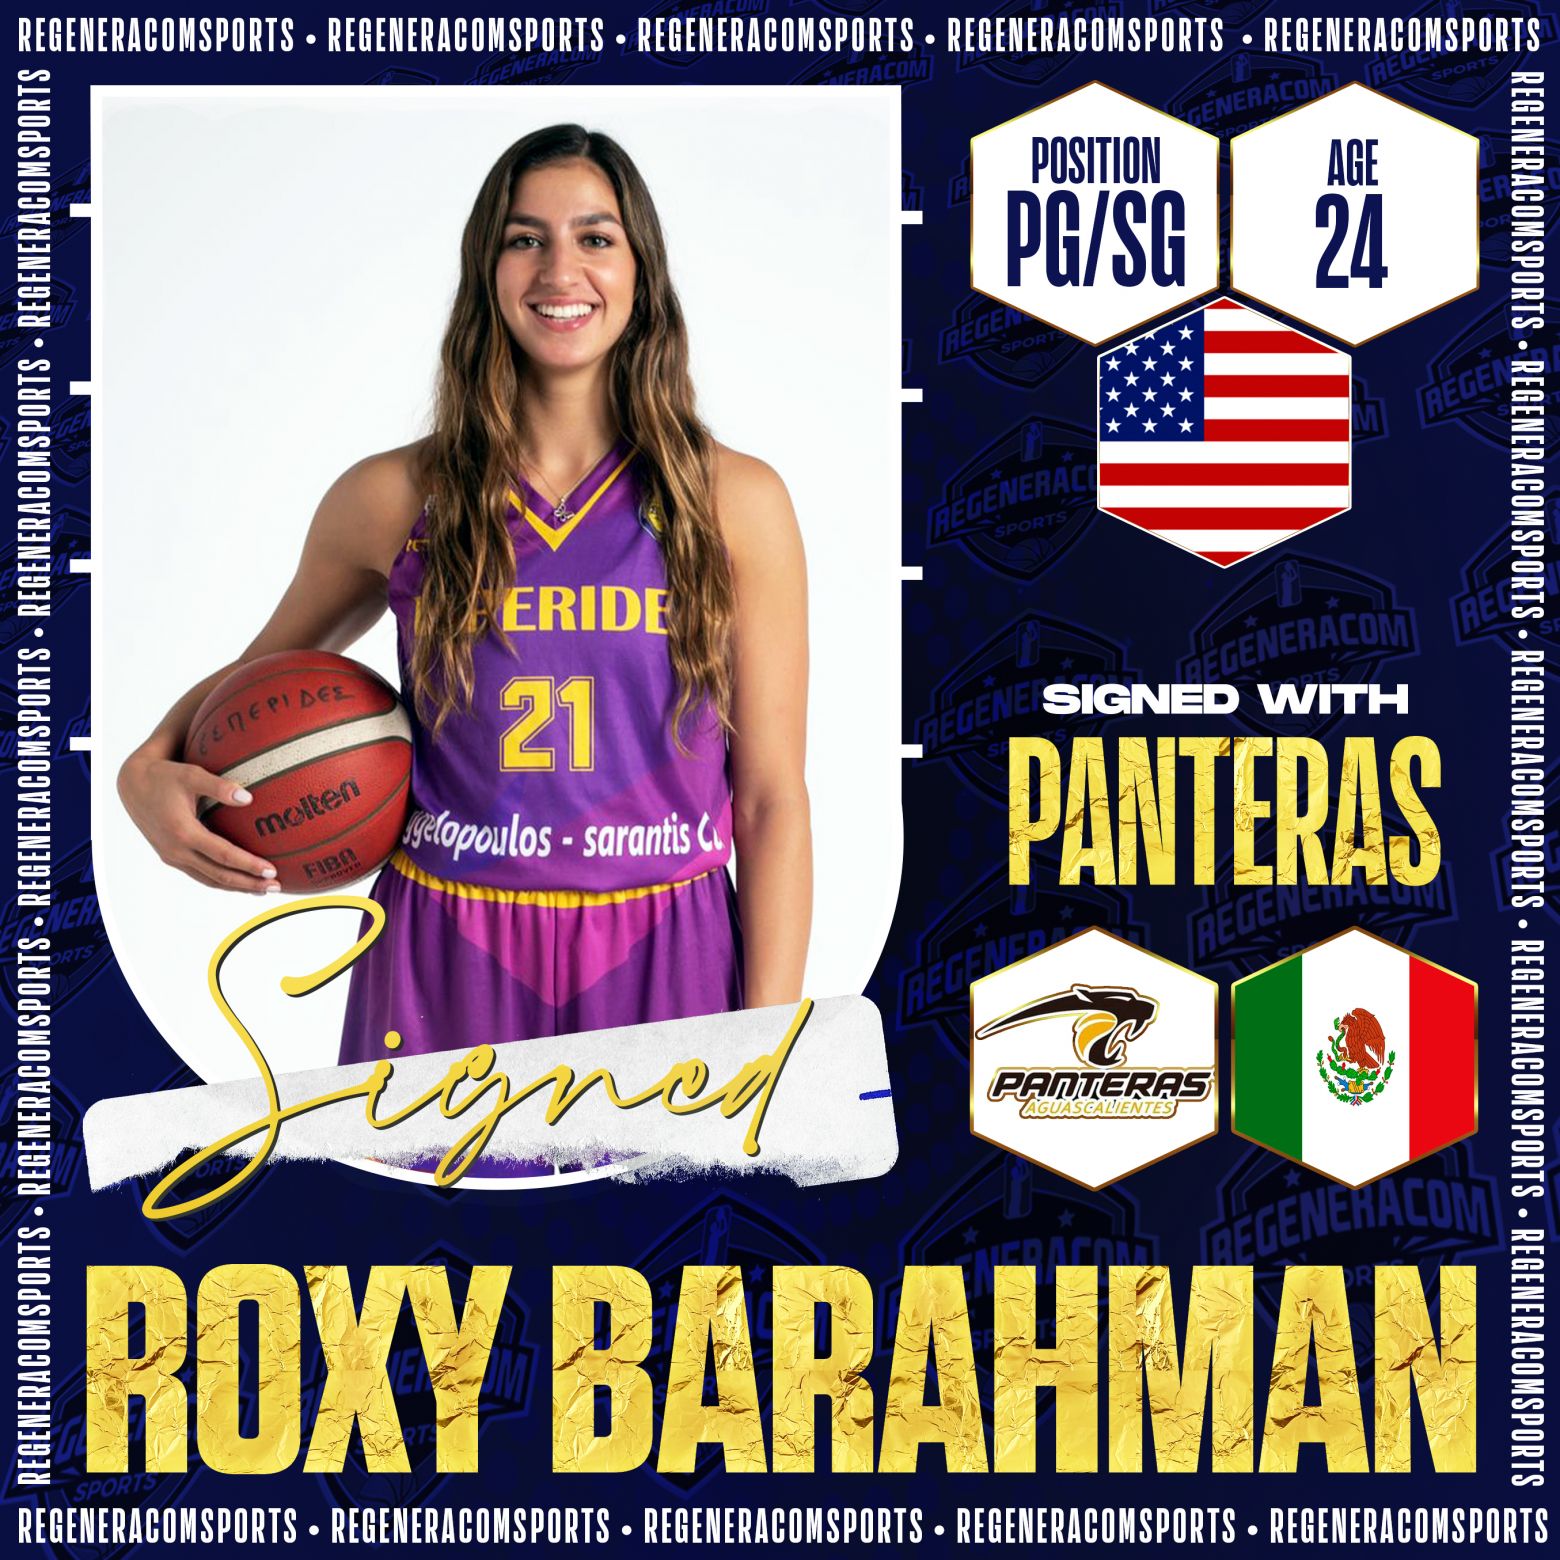 ROXY BARAHMAN has signed in Mexico with Panteras de Aguascalientes